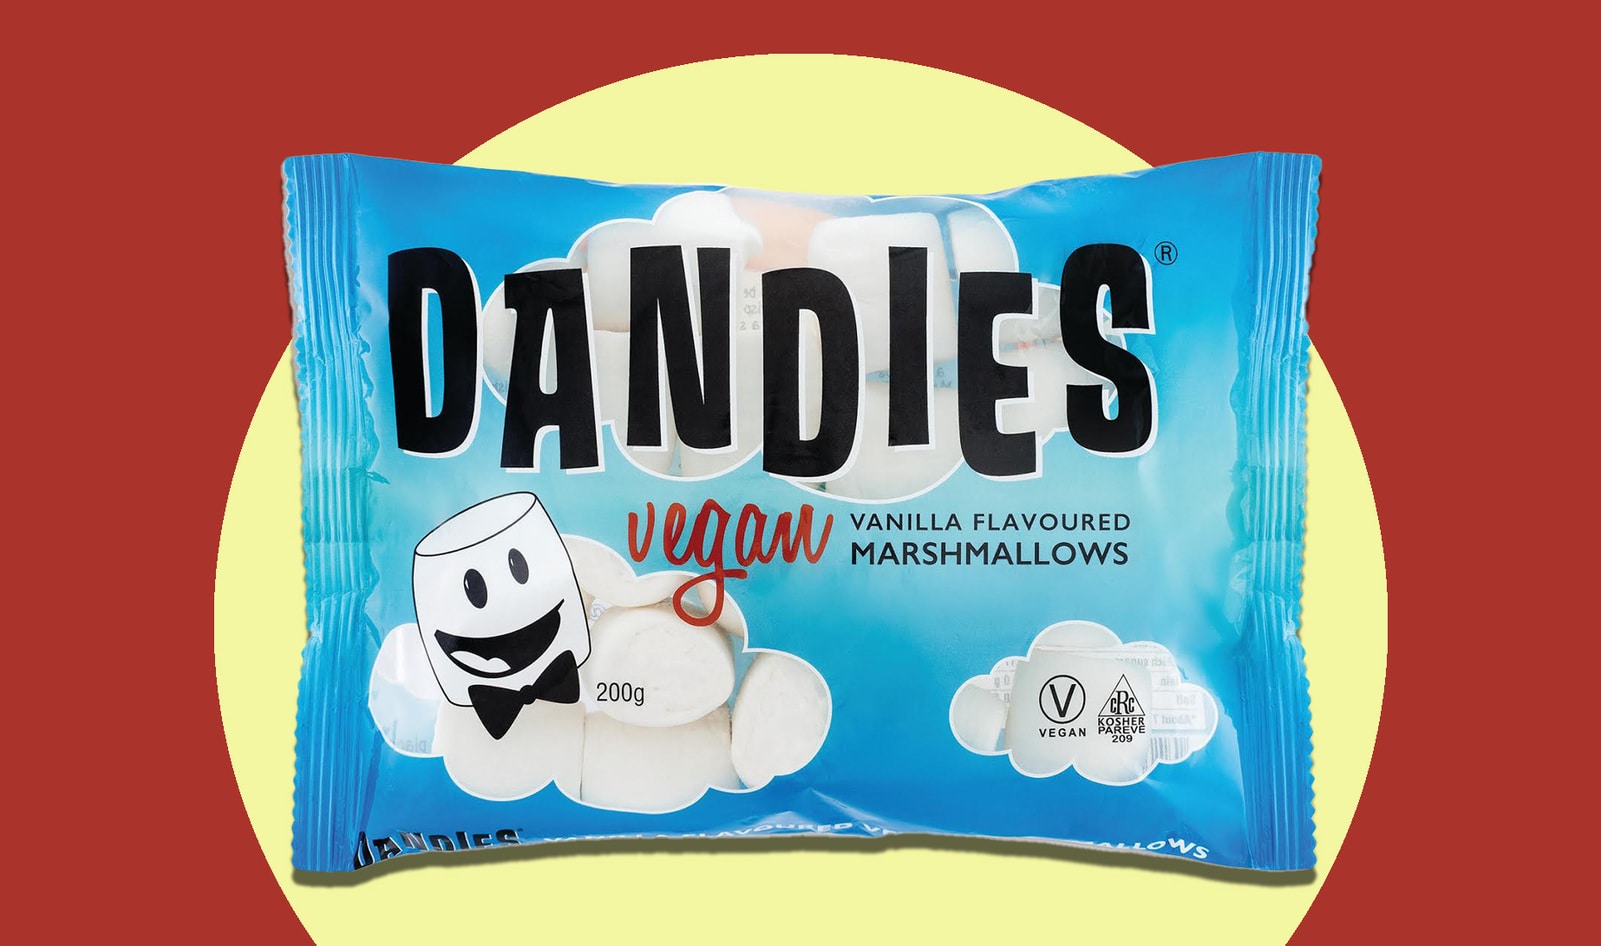 Dandies Vegan Marshmallows Launch in UK